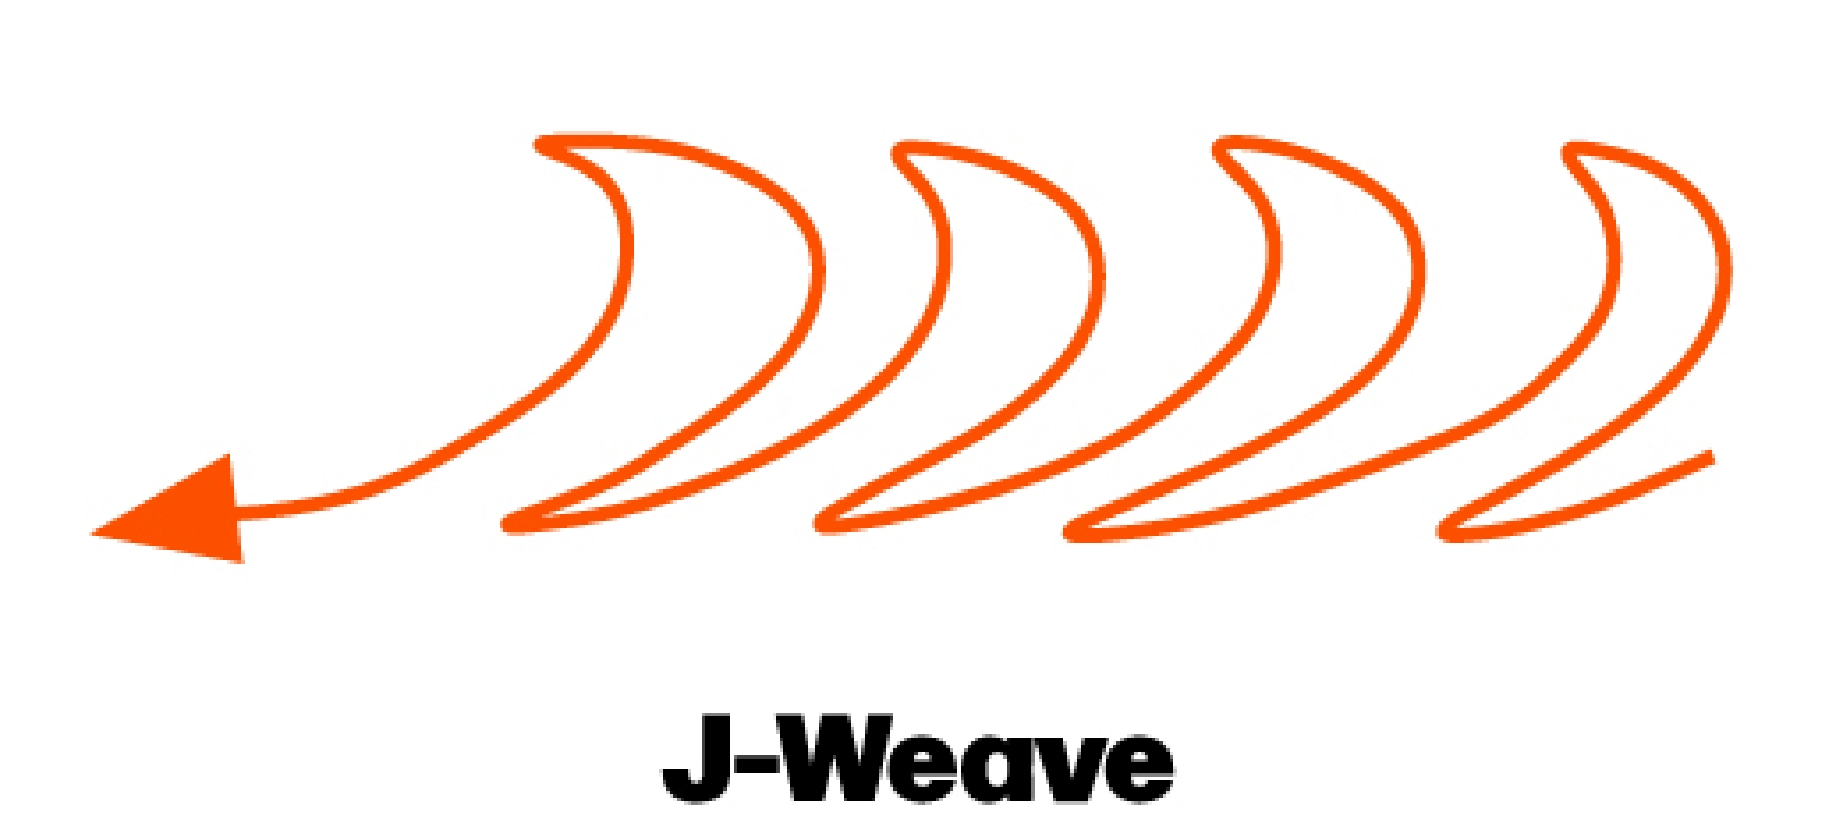 J-Weave Graphic